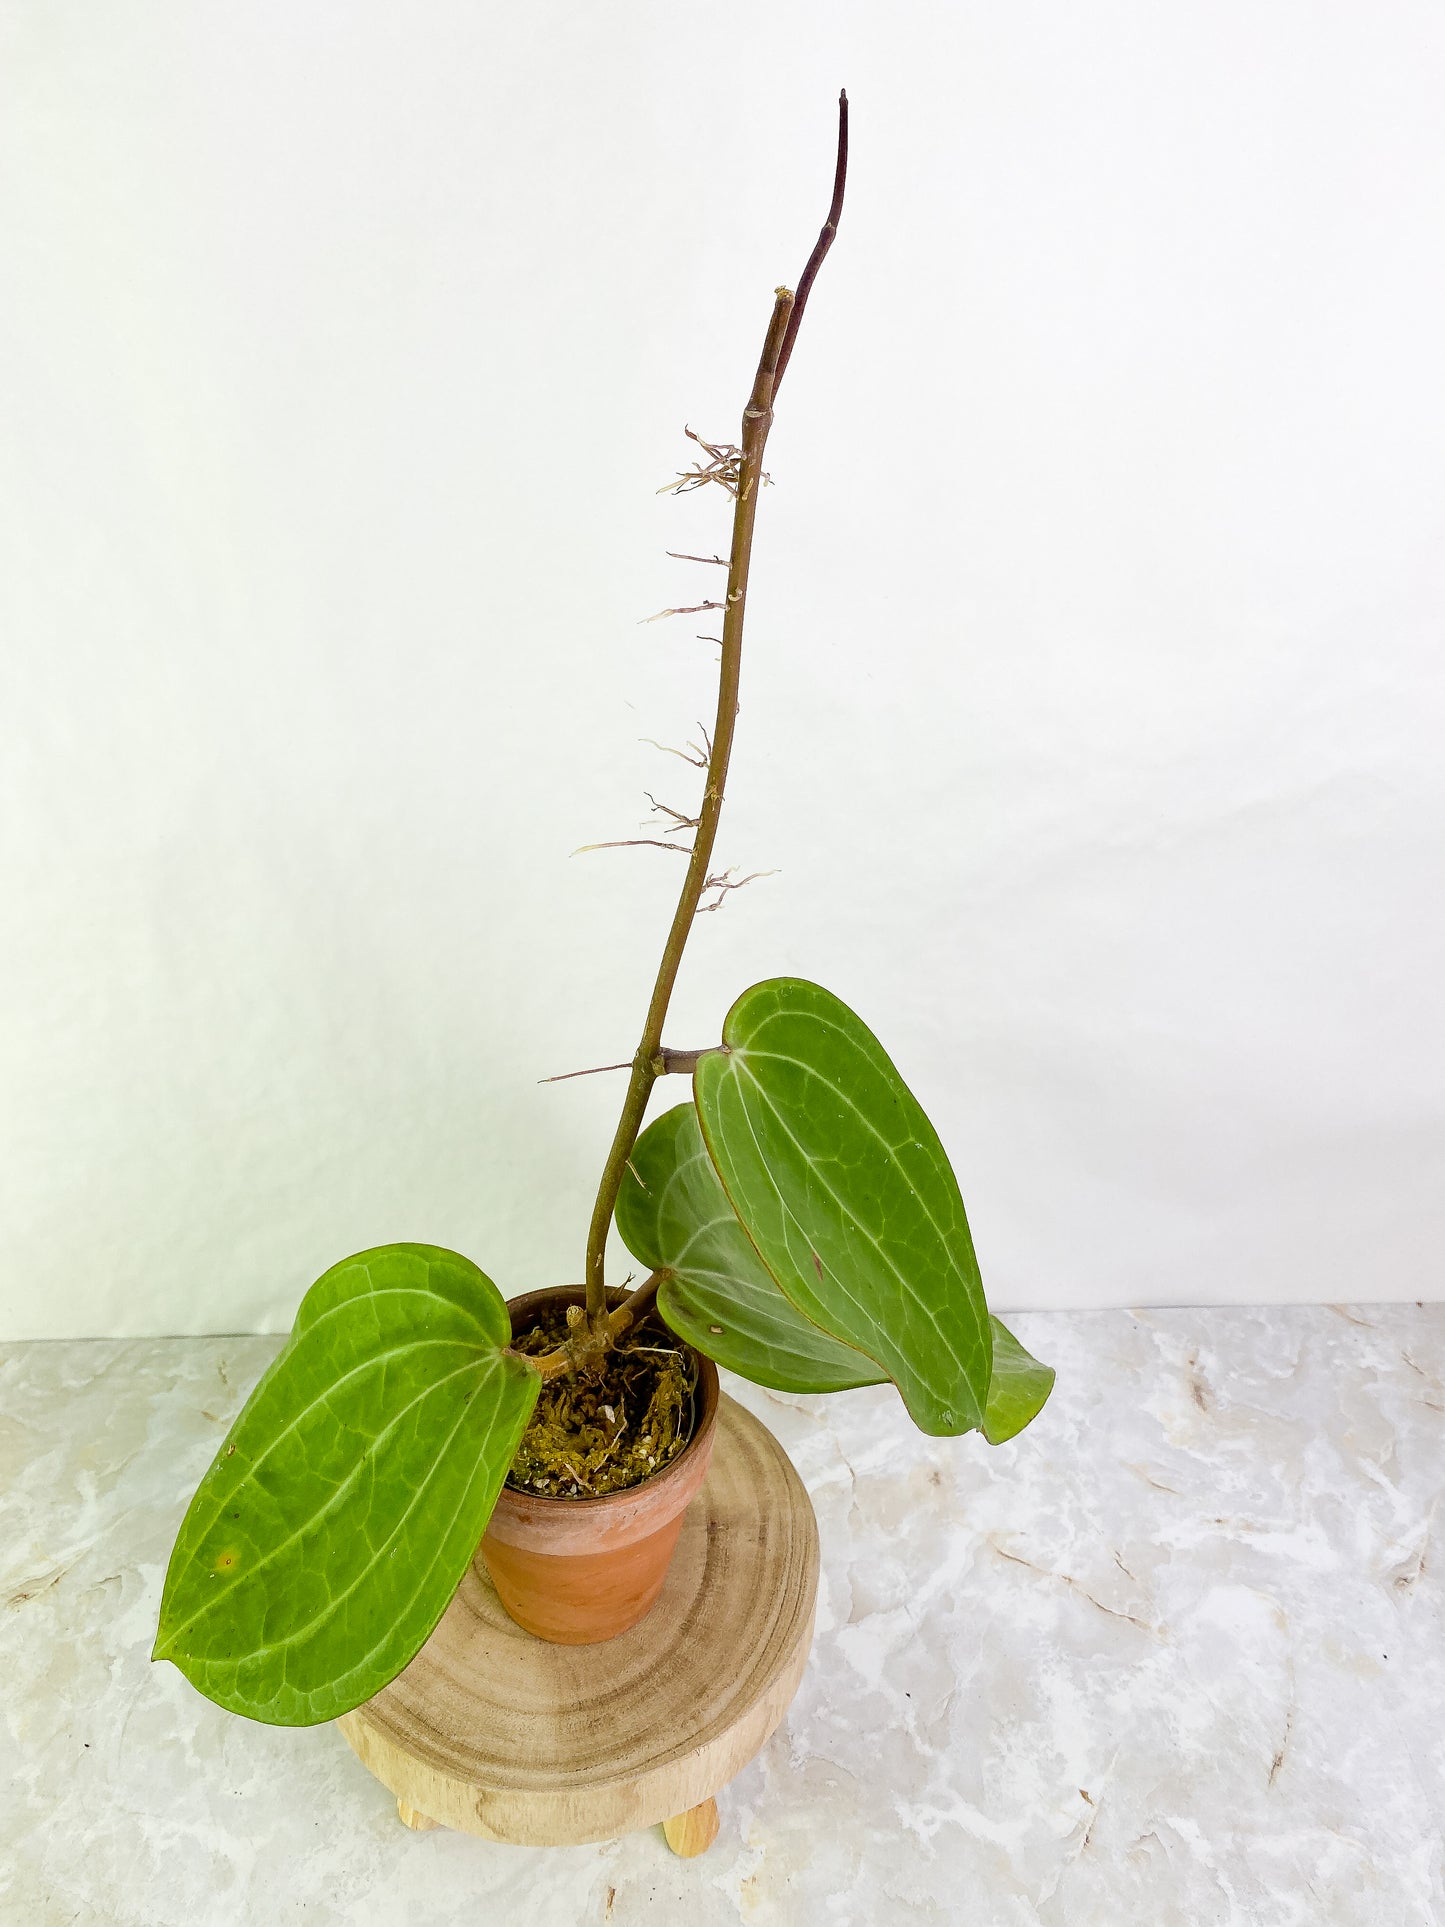 Hoya Sarawak 3 giant leaves (8" long) long stalk  slightly rooted